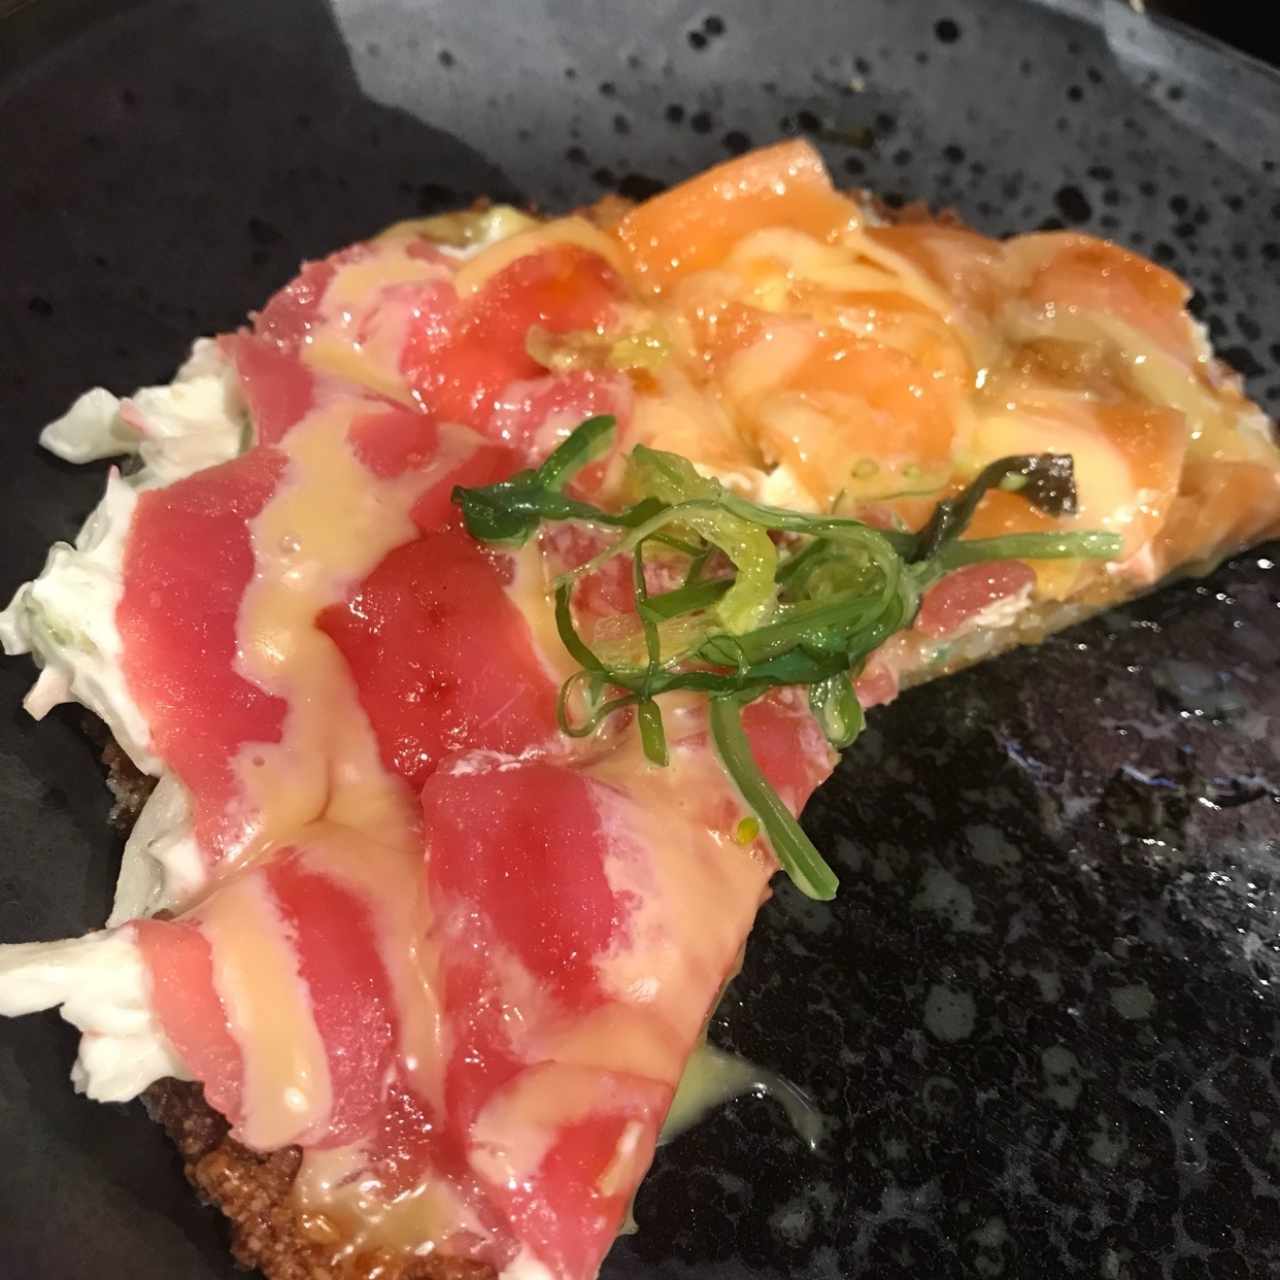 sushipizza de atun y cangrejo